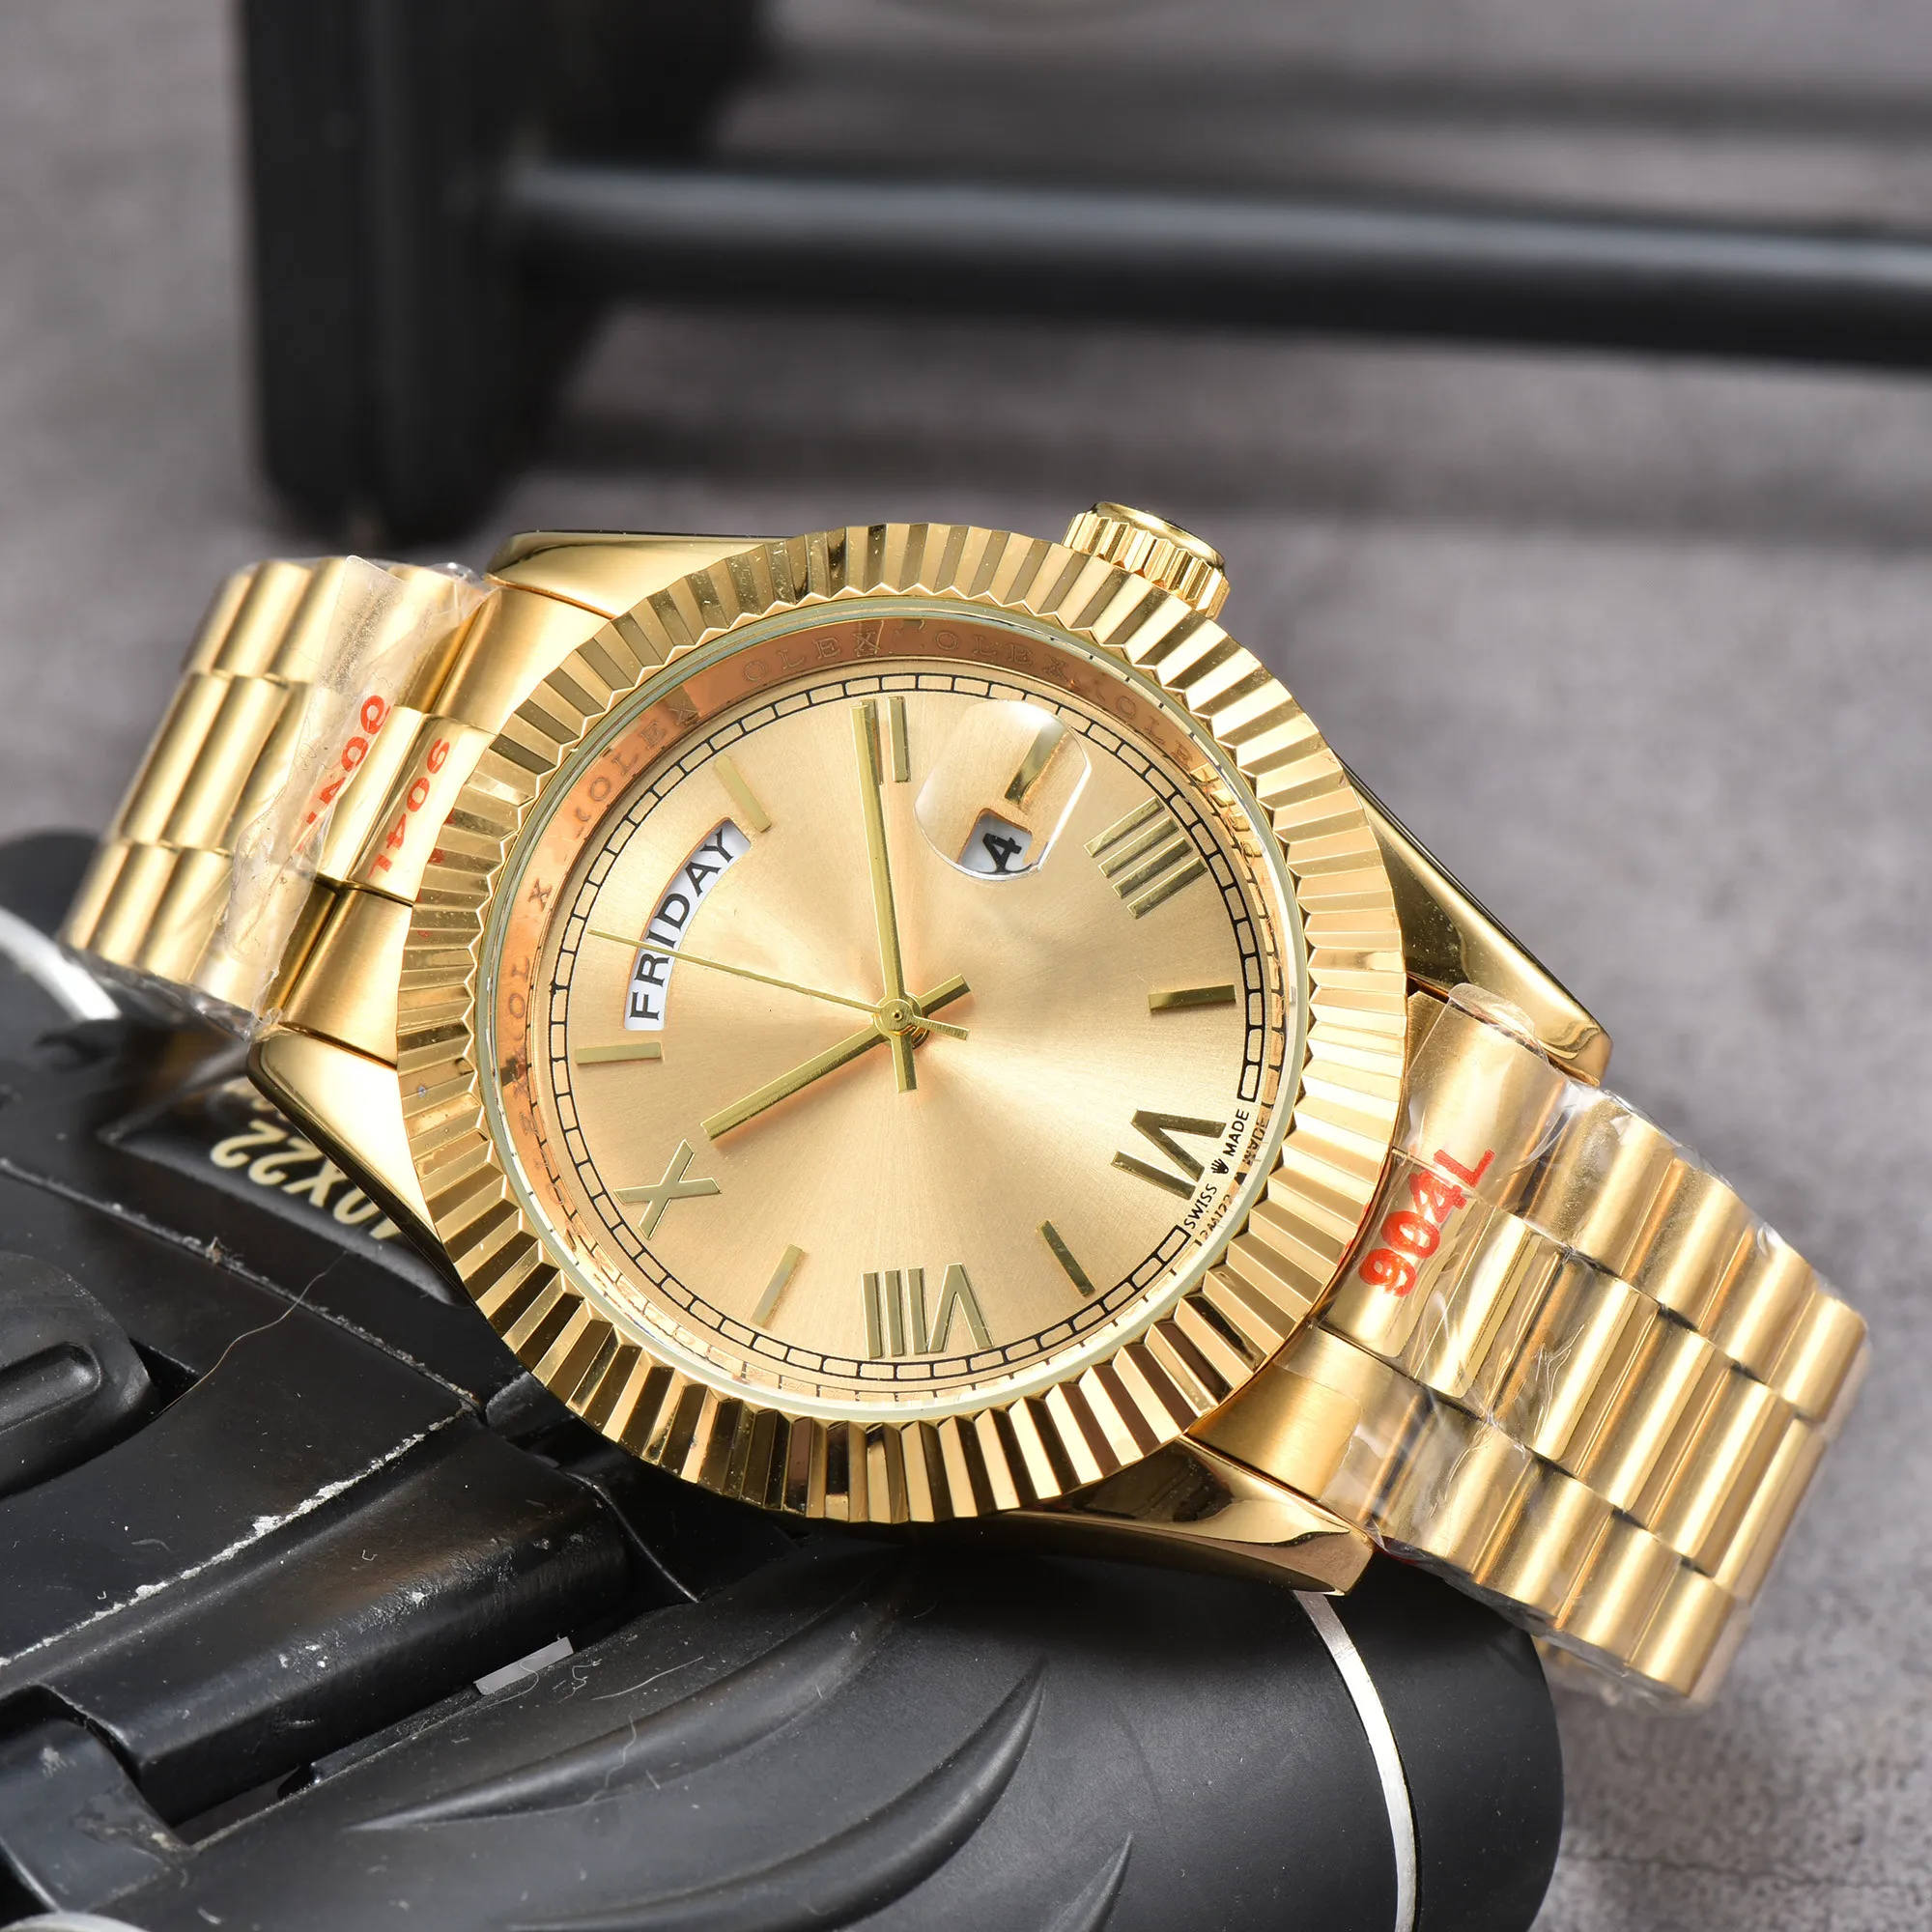 Advanced Fashion Watch, Sports Designer's Men and Women's Bowl Watch, luksusowy kwarcowy zegarek, najnowszy pasek ze stali nierdzewnej, Waterproof Bowl Watch #1003